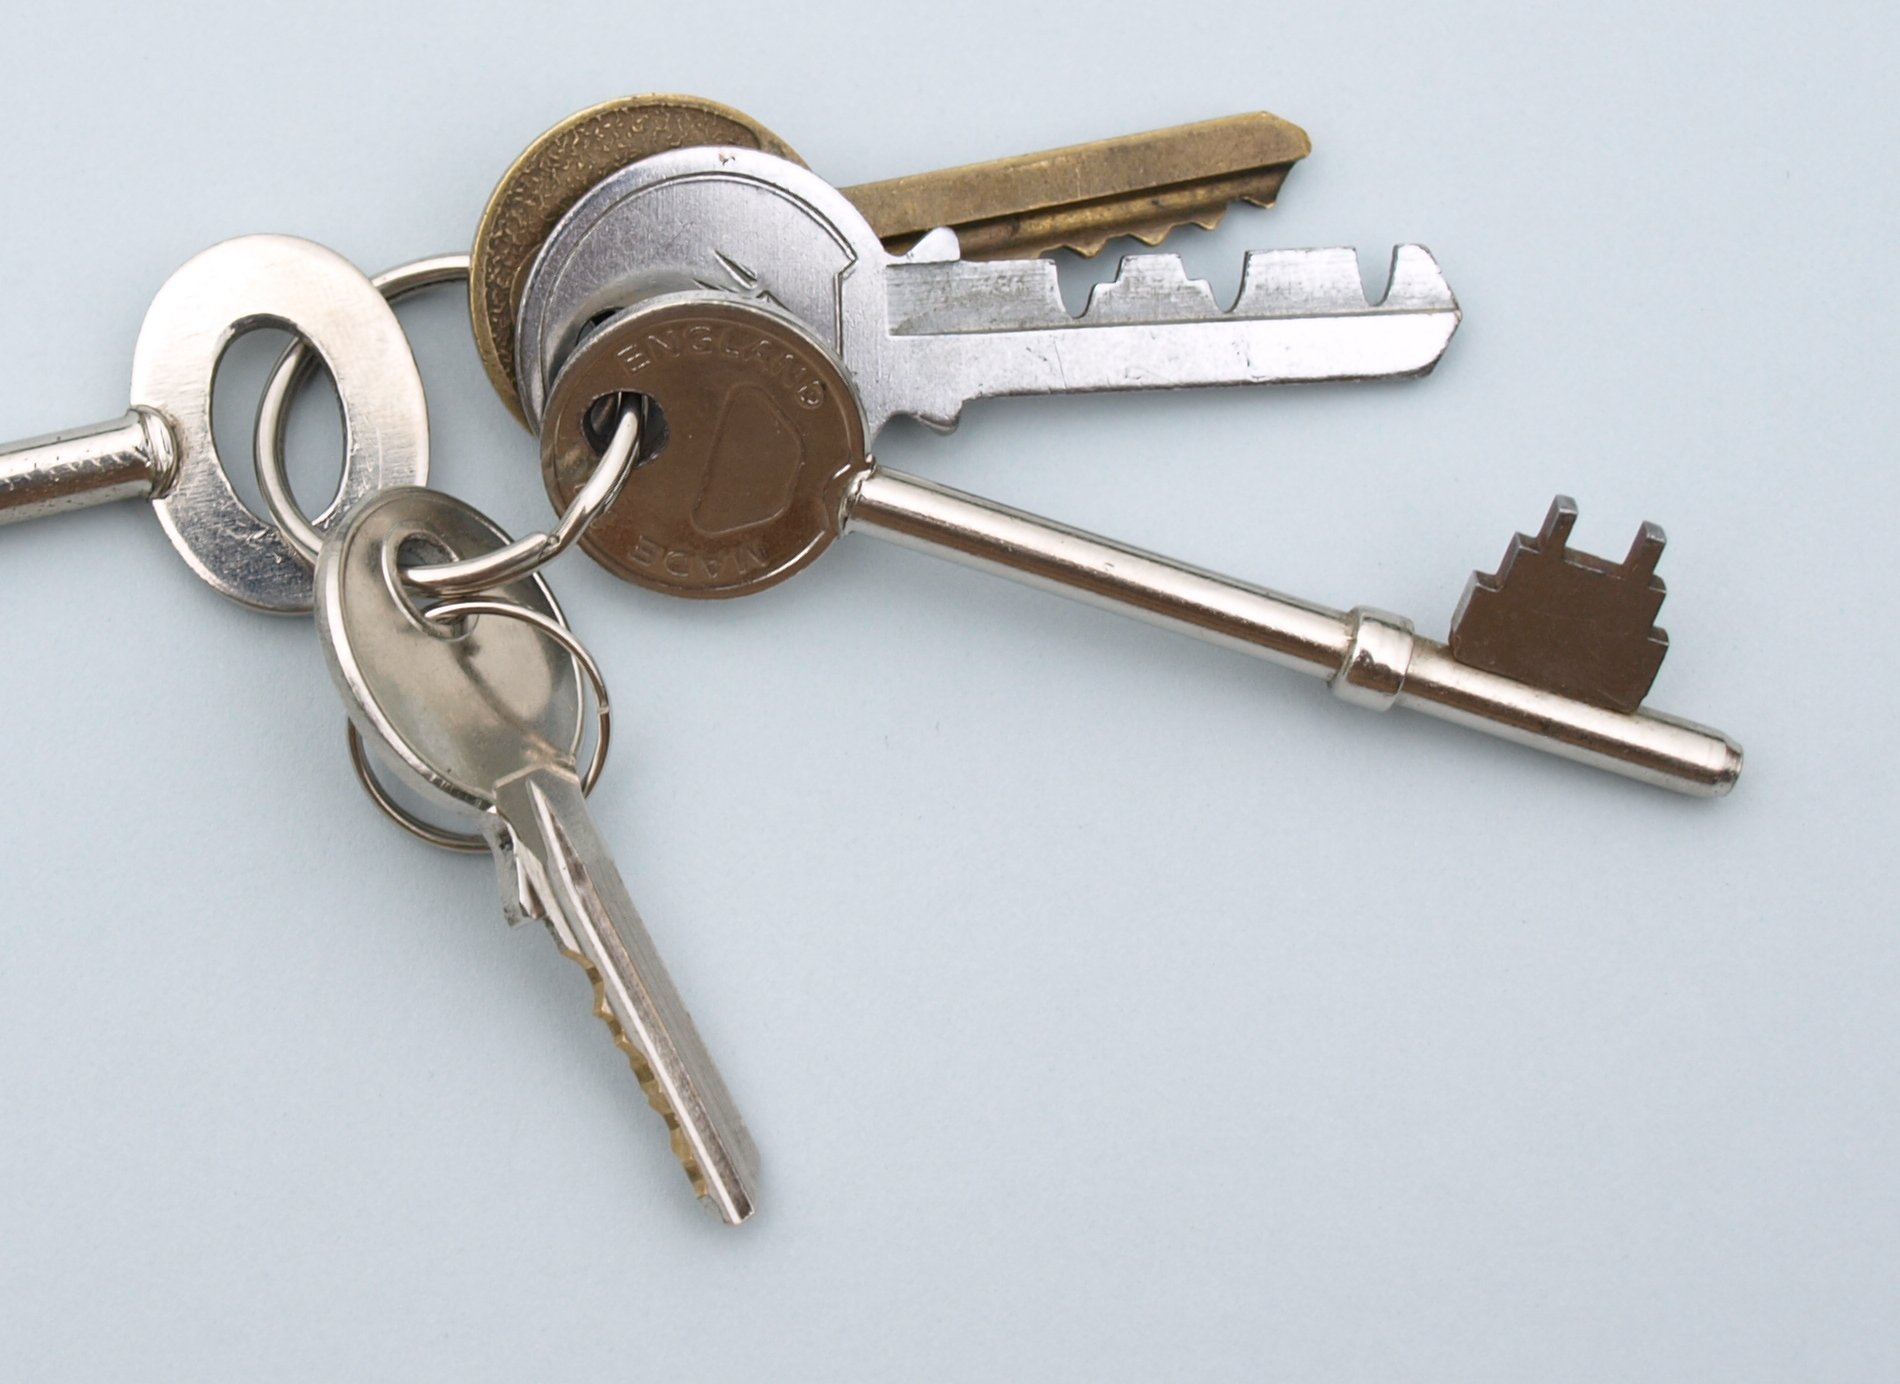 Keys picture. Связка ключей. Ключ дверной. Квартирные ключи. Ключ от входной двери.